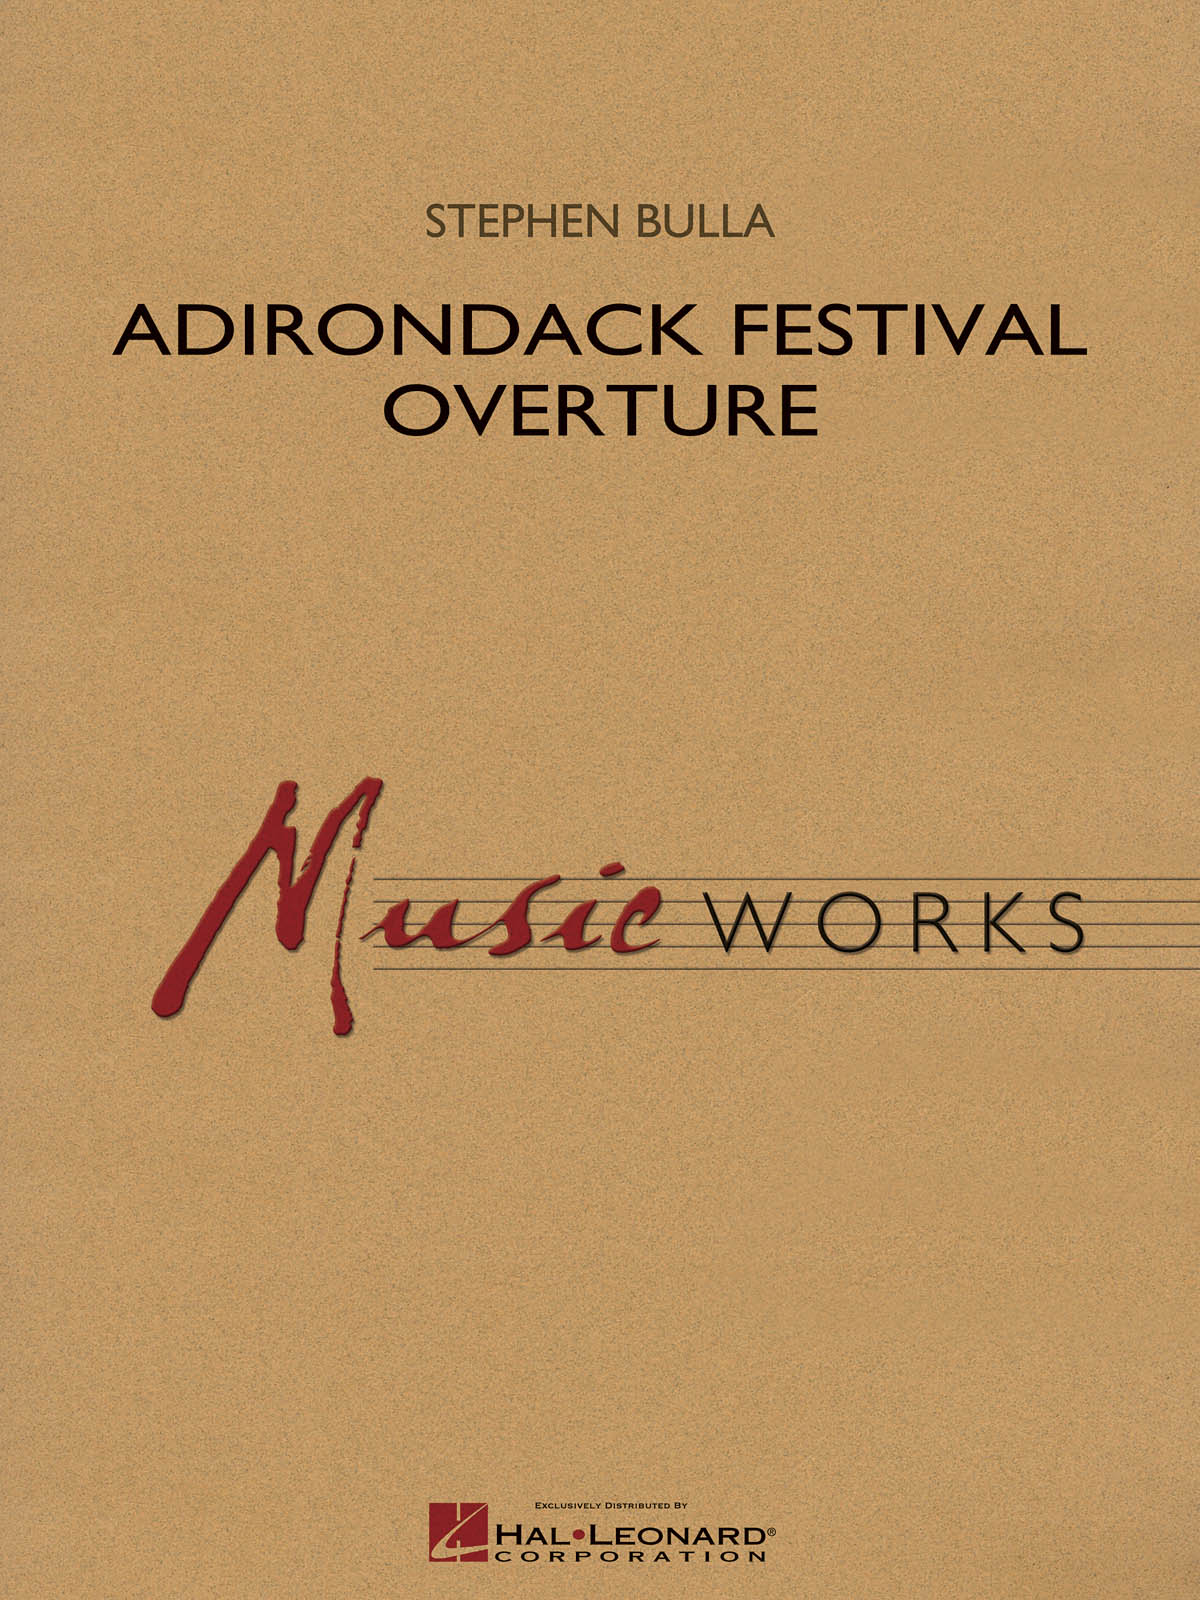 Stephen Bulla: Adirondack Festival Overture: Concert Band: Score & Parts